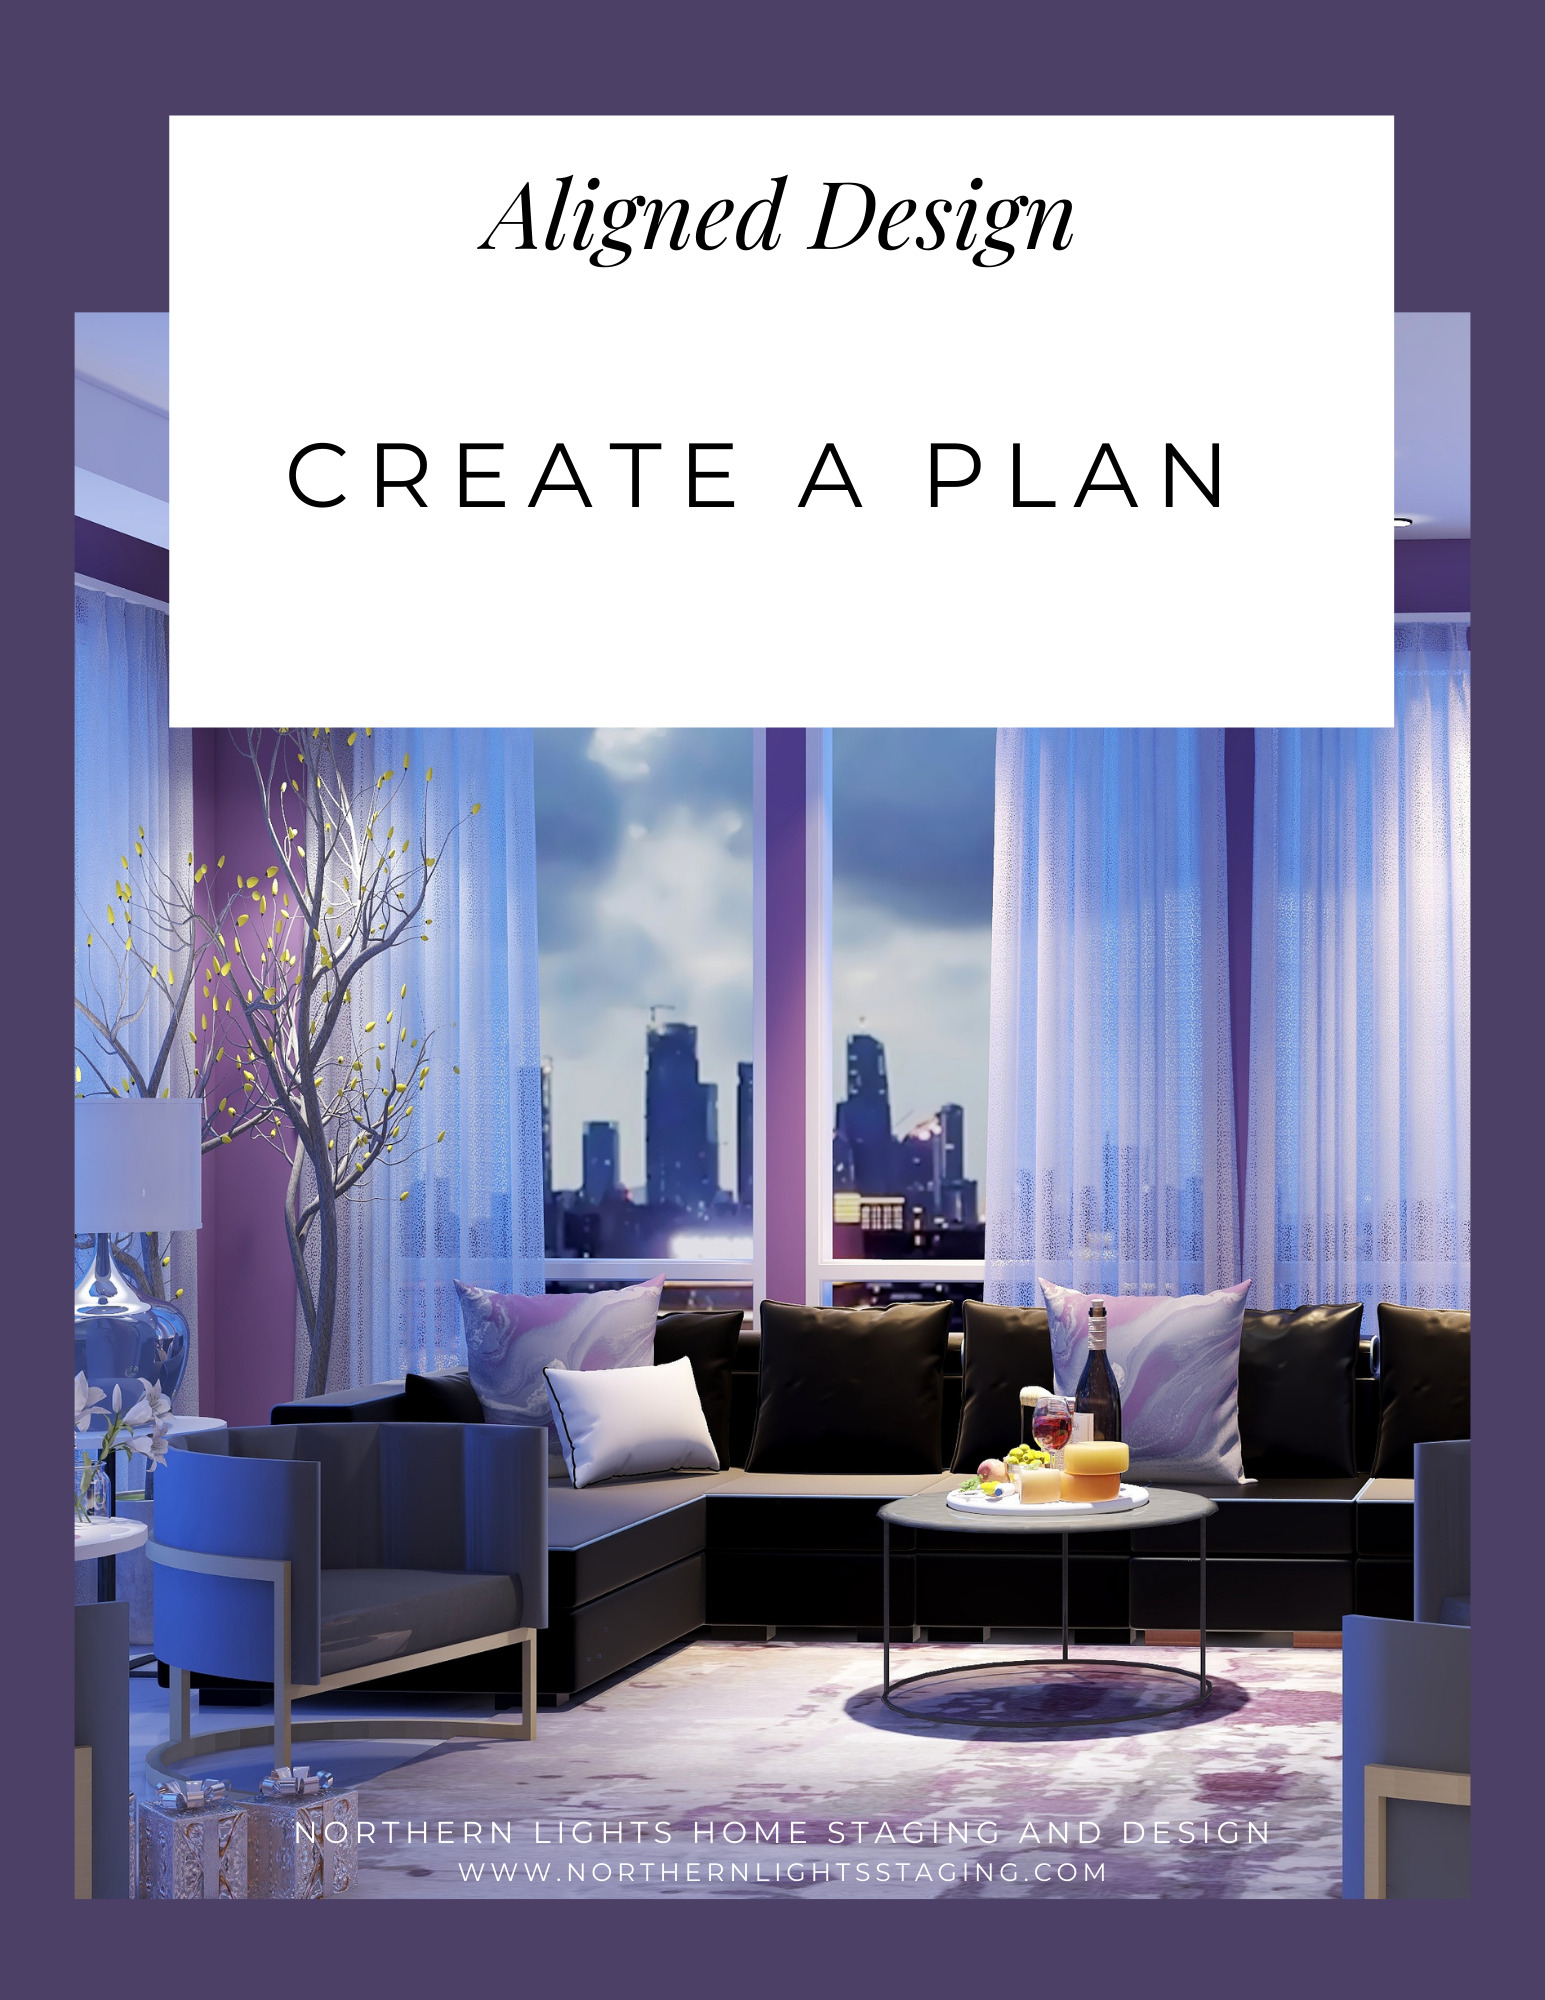 Aligned Design- Create a Plan